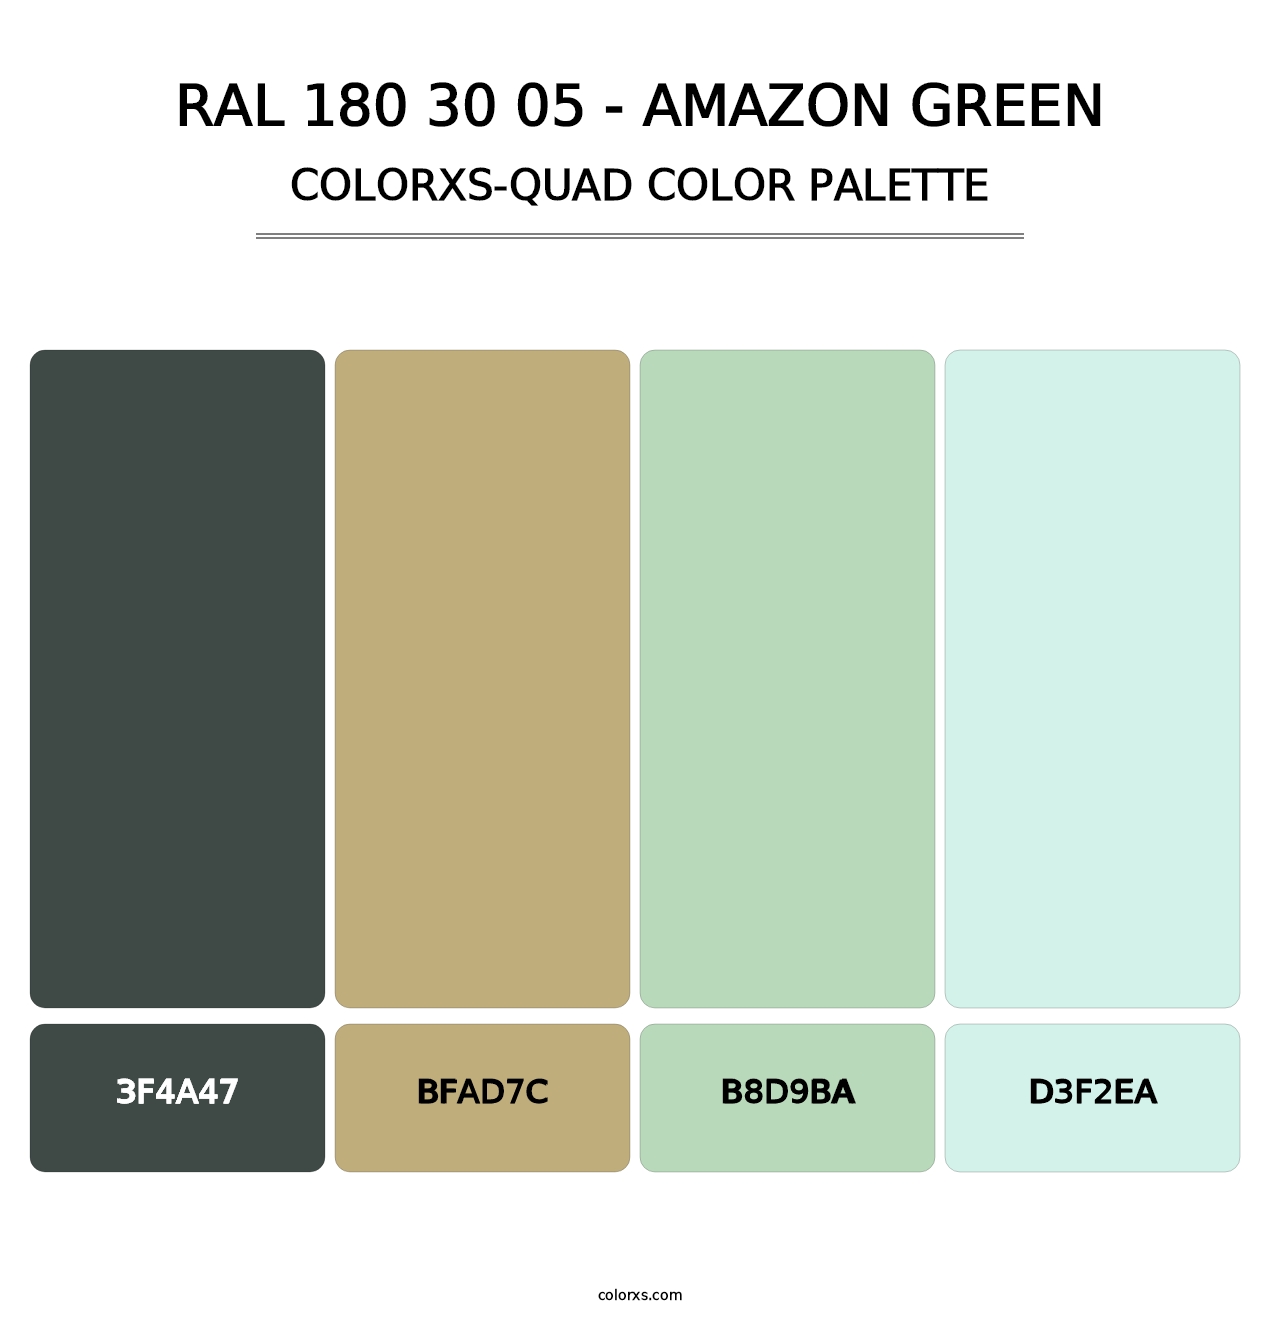 RAL 180 30 05 - Amazon Green - Colorxs Quad Palette